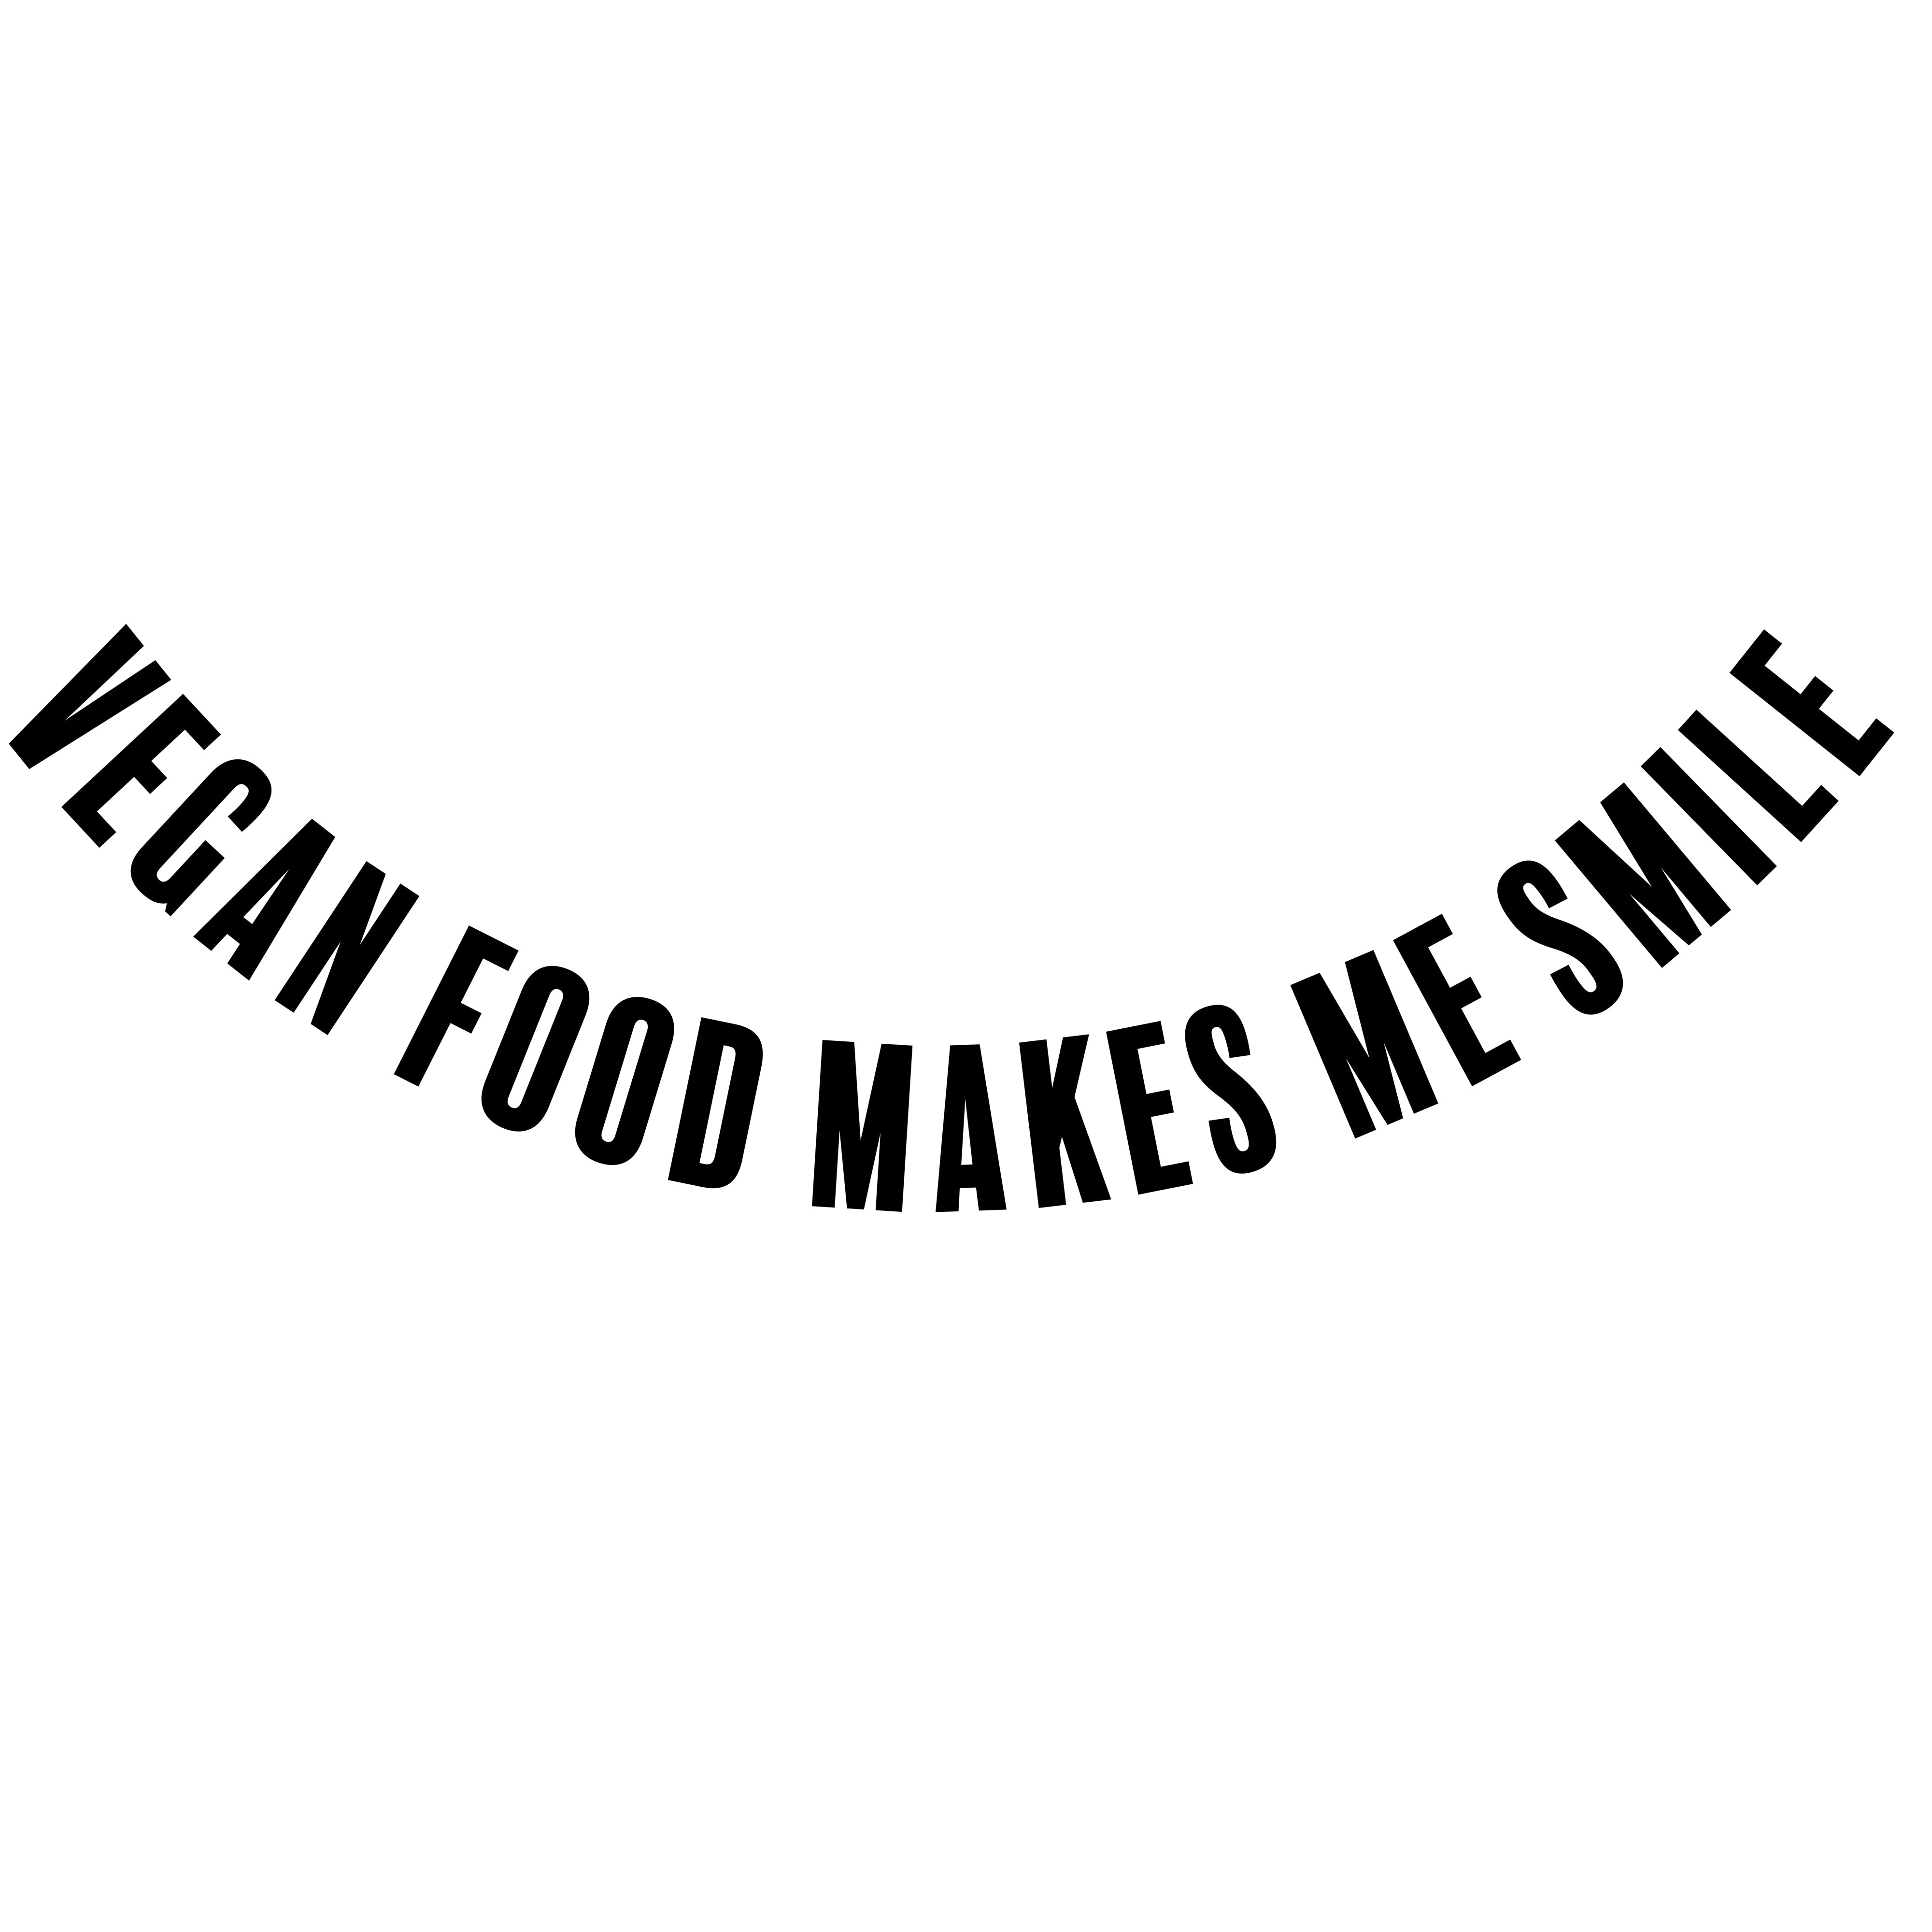 vegan food makes me smile  - Organic Oversized Shirt ST/ST